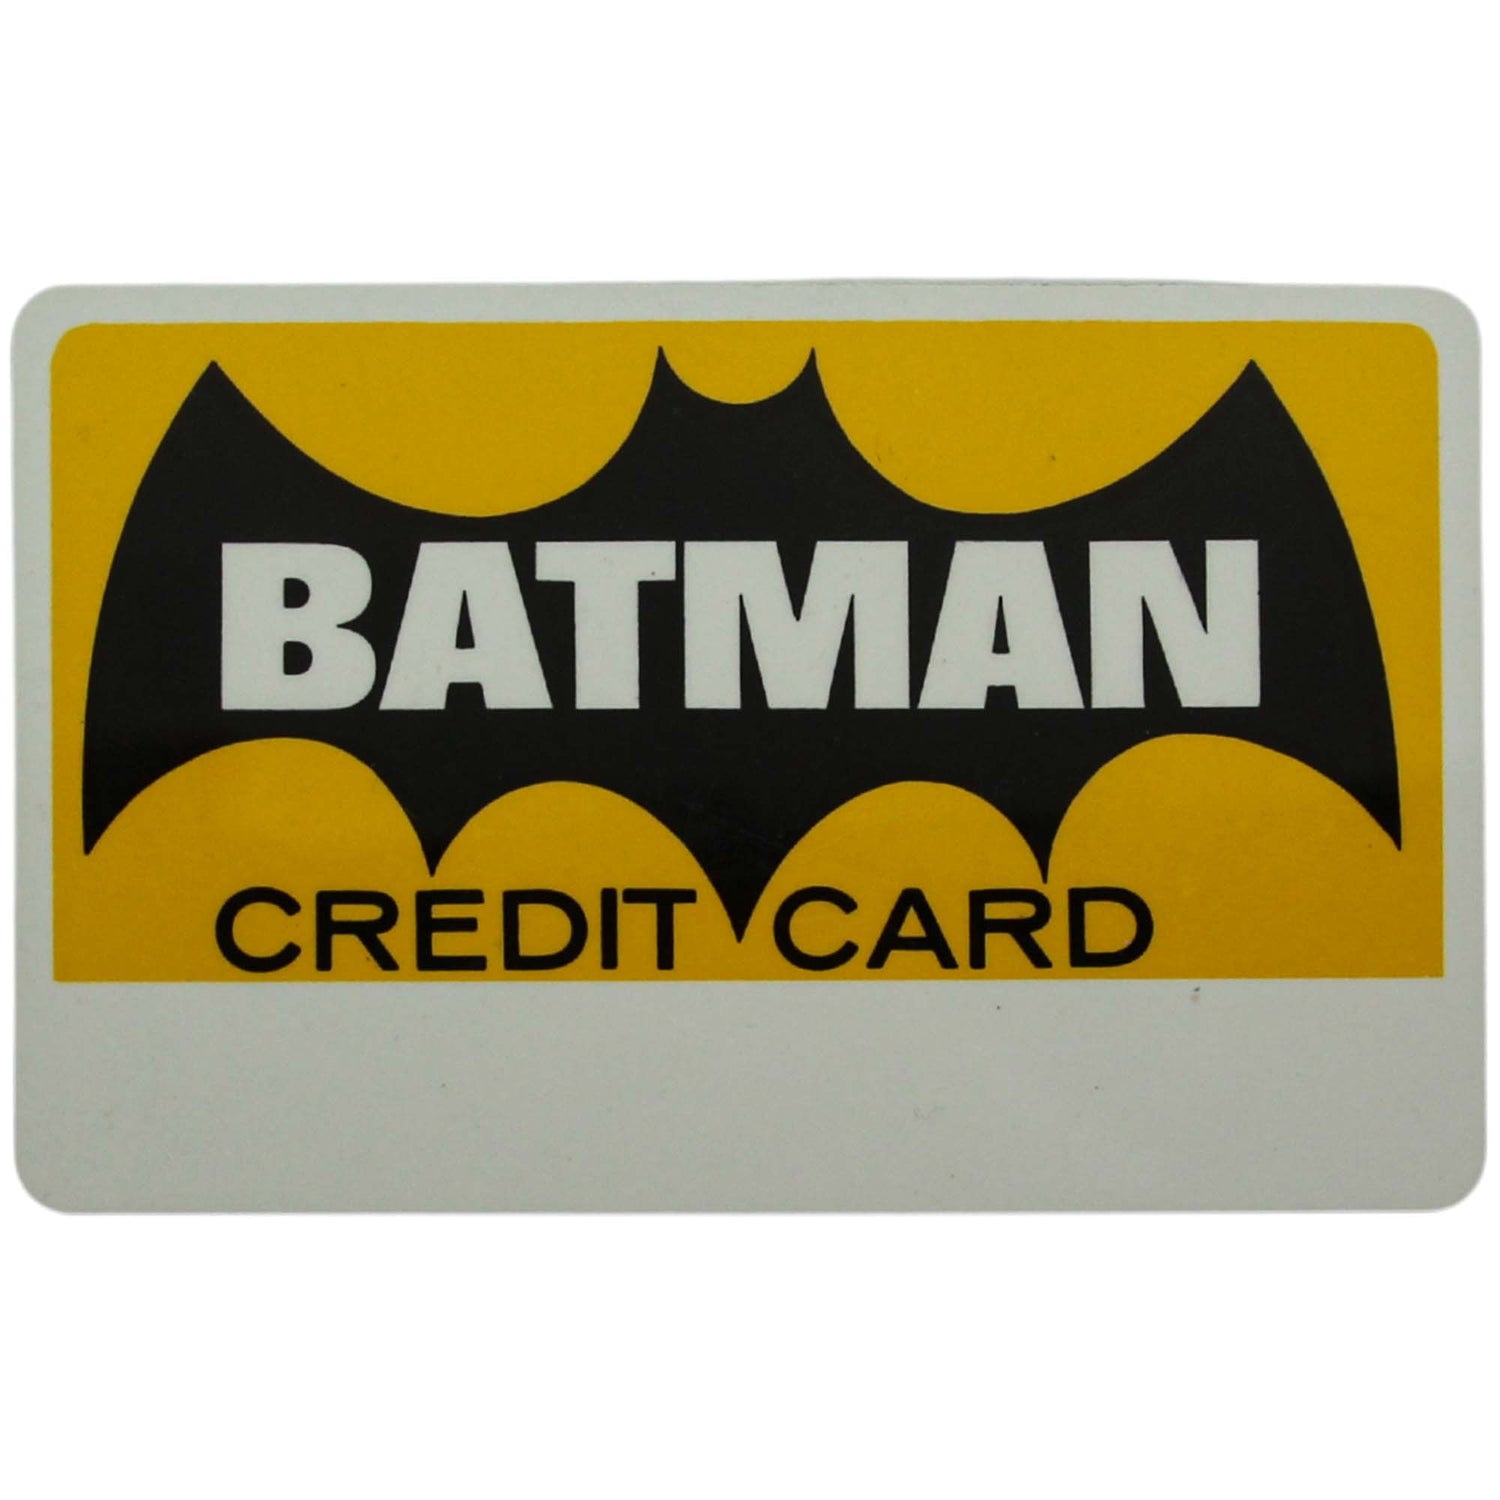 Batman Credit Card ZOOM